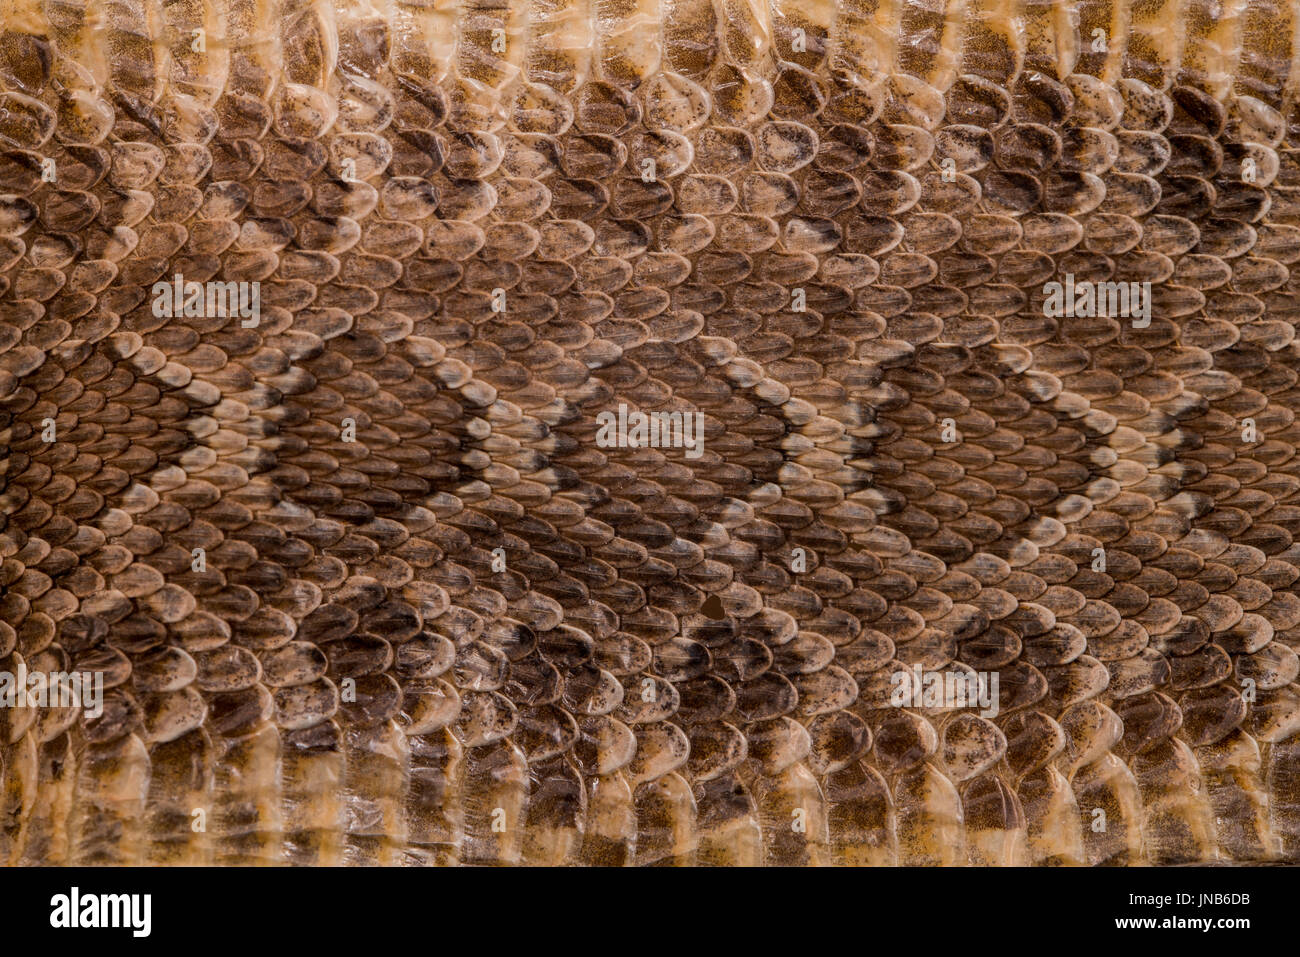 Rattlesnake Skin Stock Photos & Rattlesnake Skin Stock Images - Alamy1300 x 957